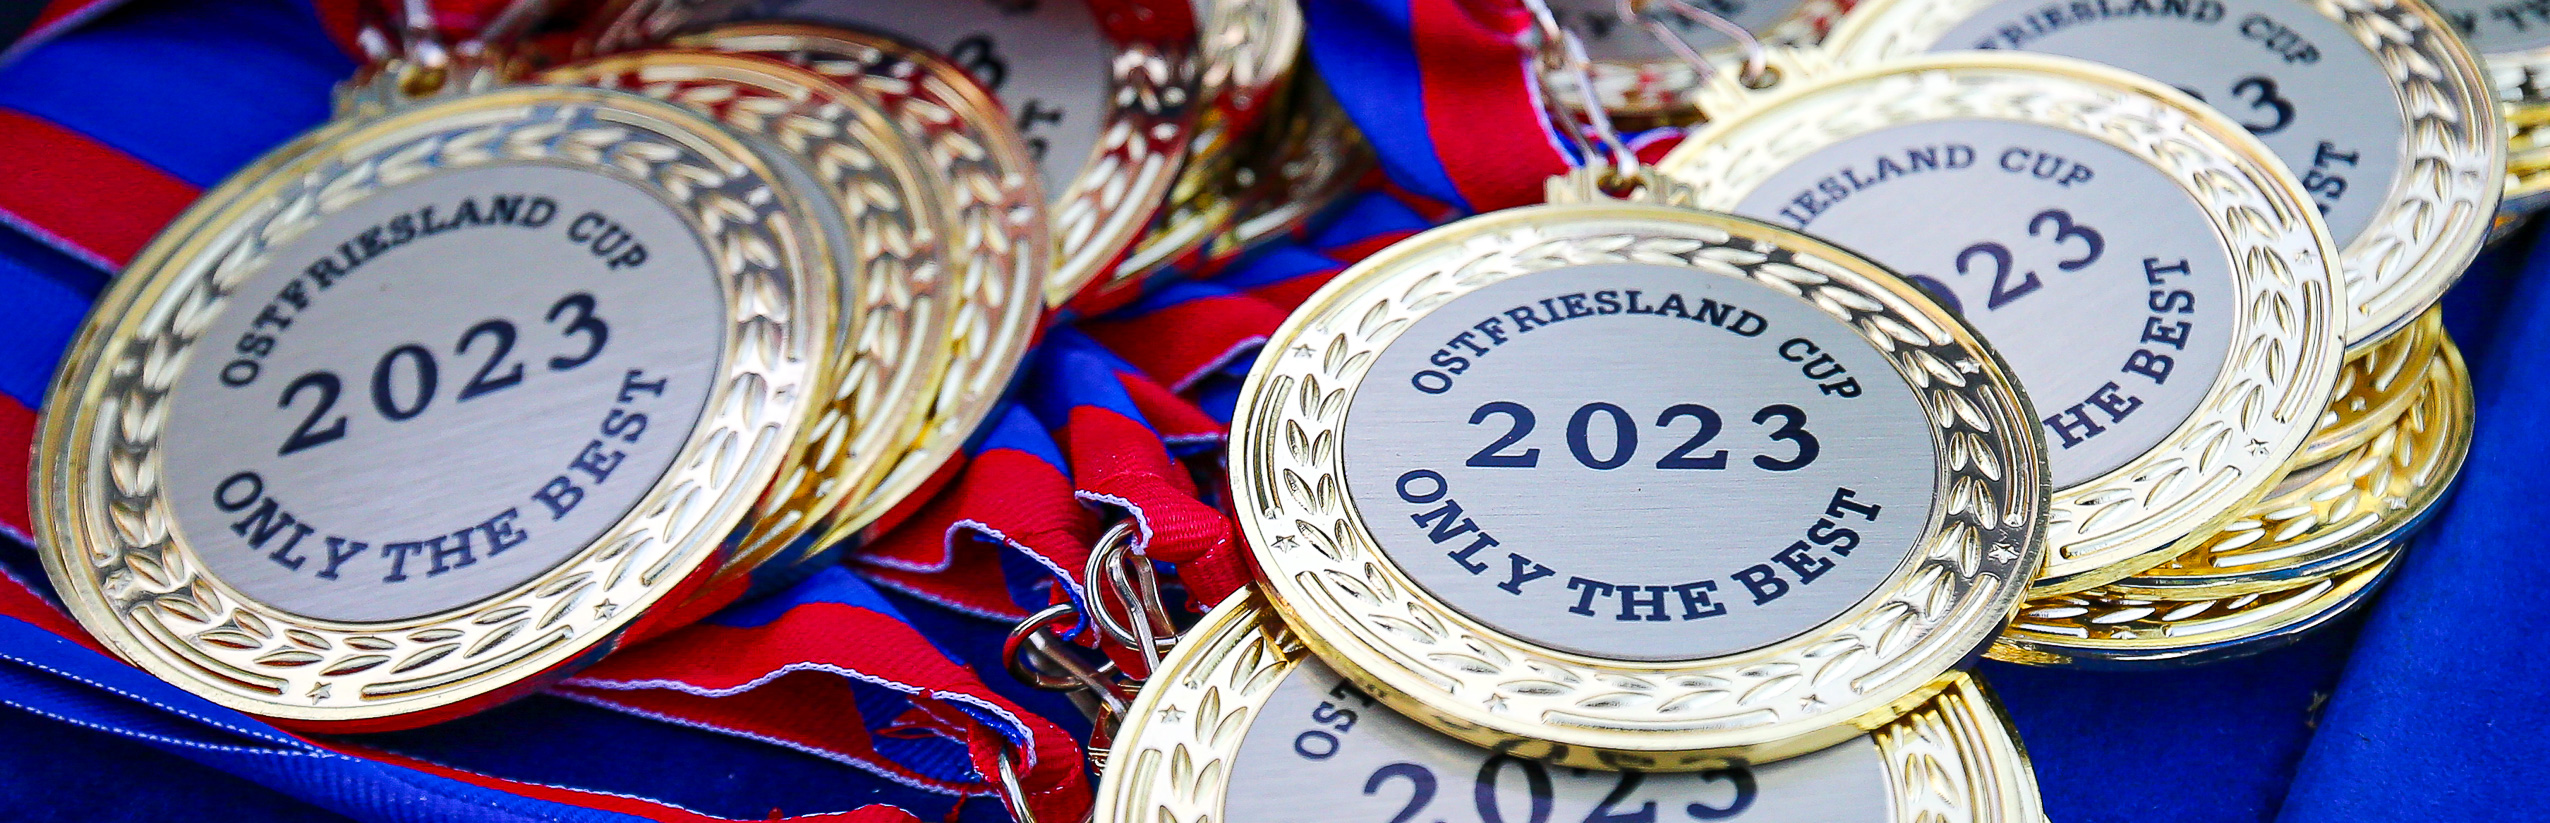 Ostfriesland-Cup 2023